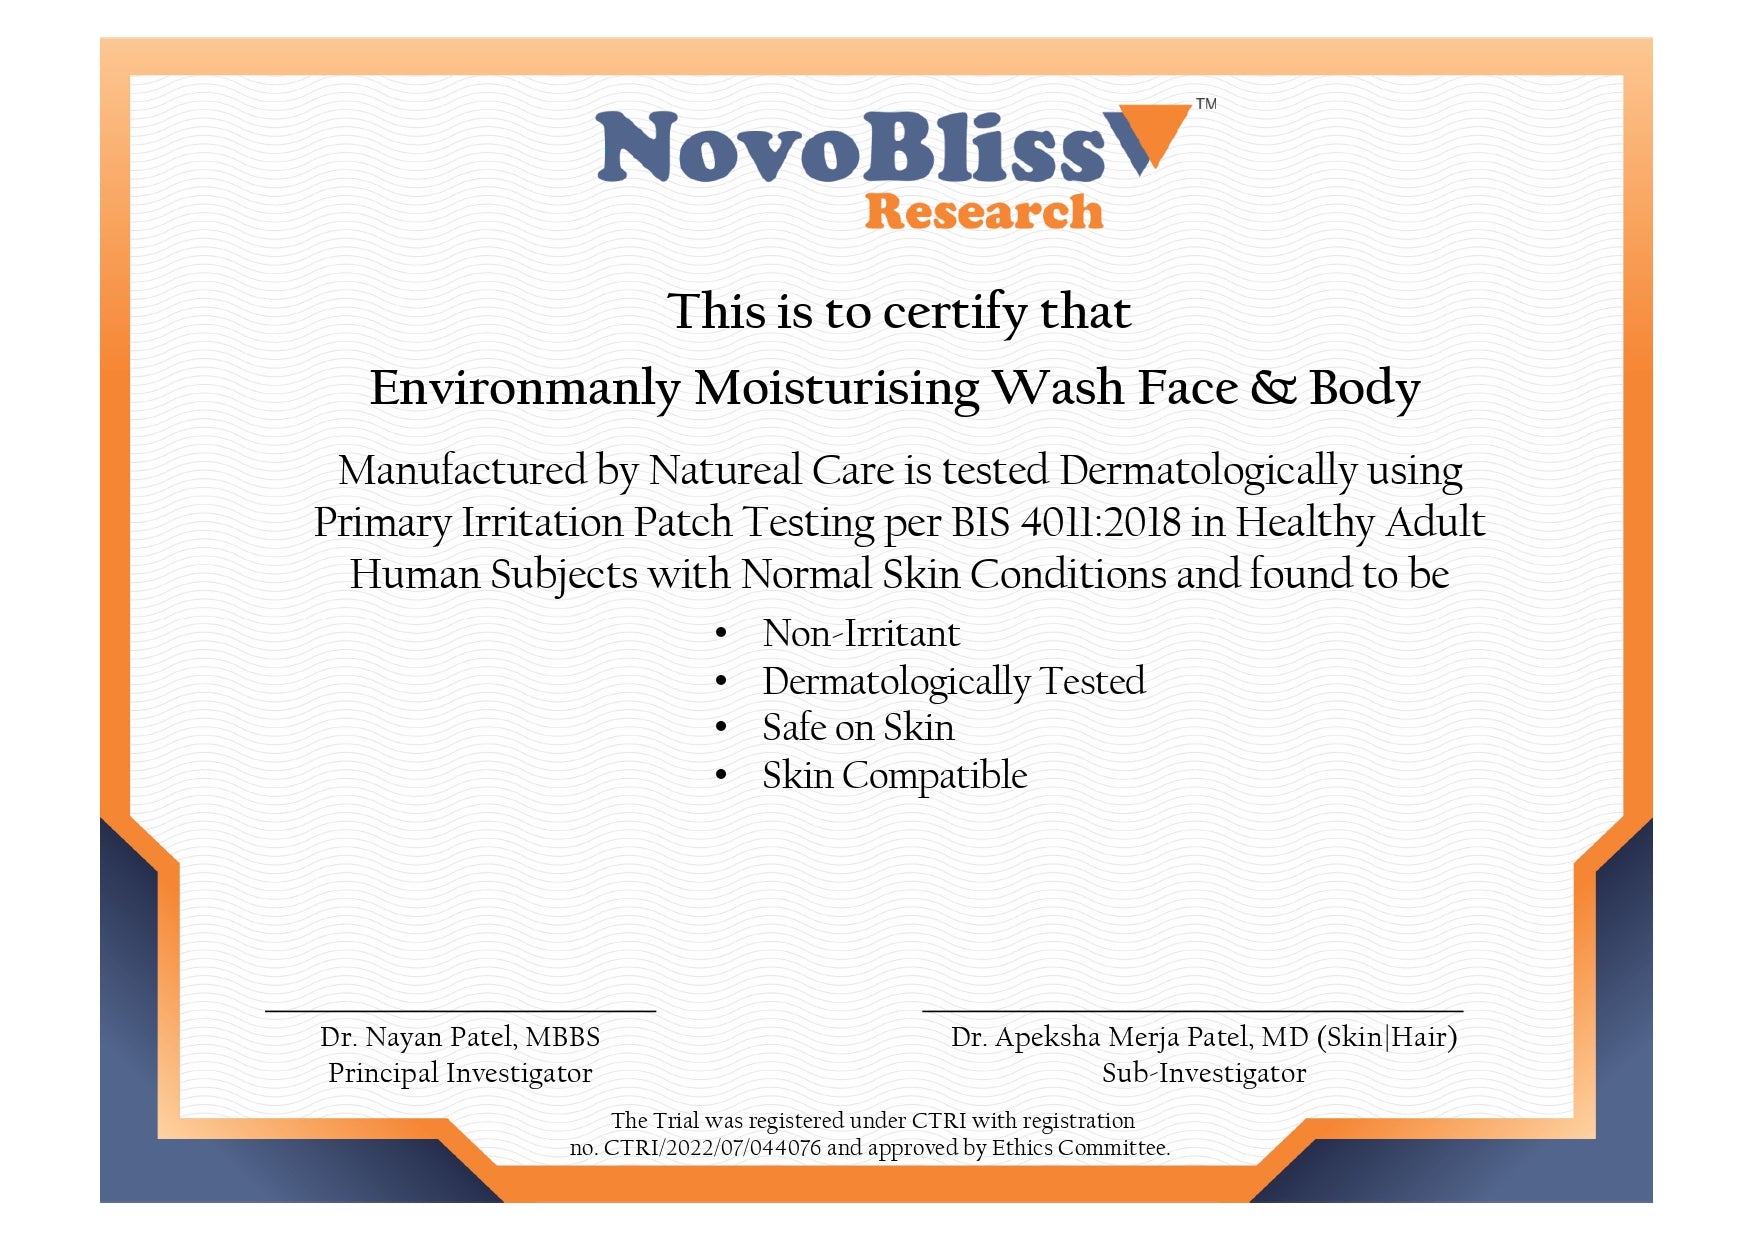 Face & Body Moisturising Wash - Environmanly